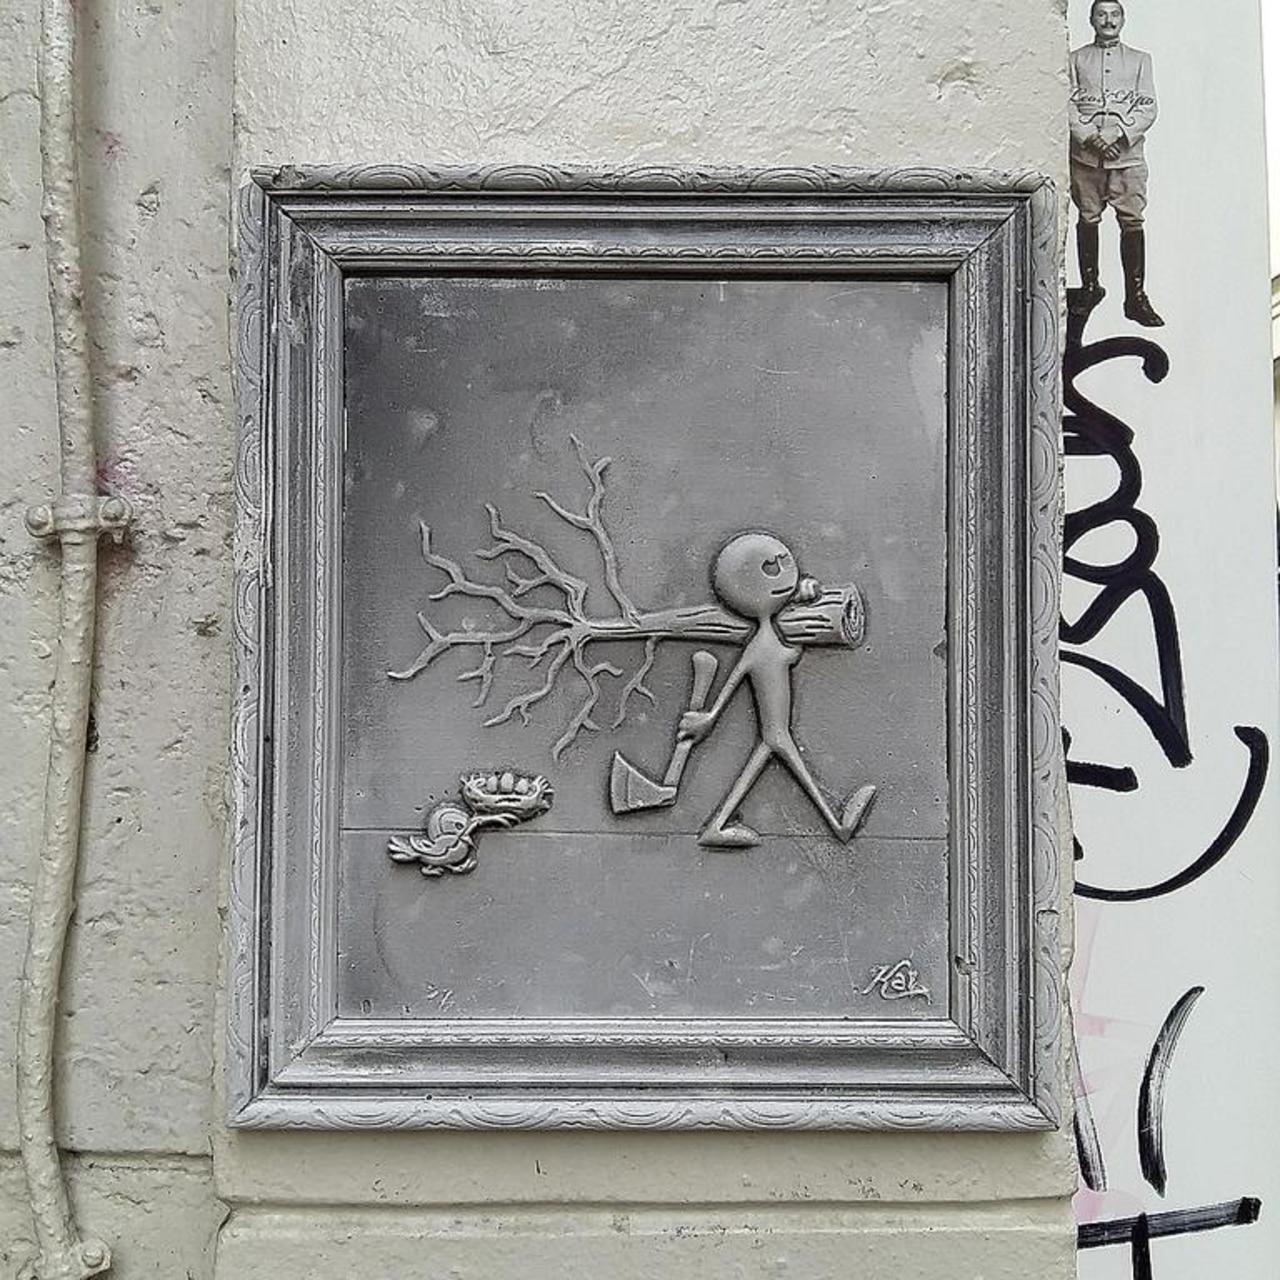 Street Art by Kaiaspire in #Paris http://www.urbacolors.com #art #mural #graffiti #streetart http://t.co/OdX51Fa4QQ